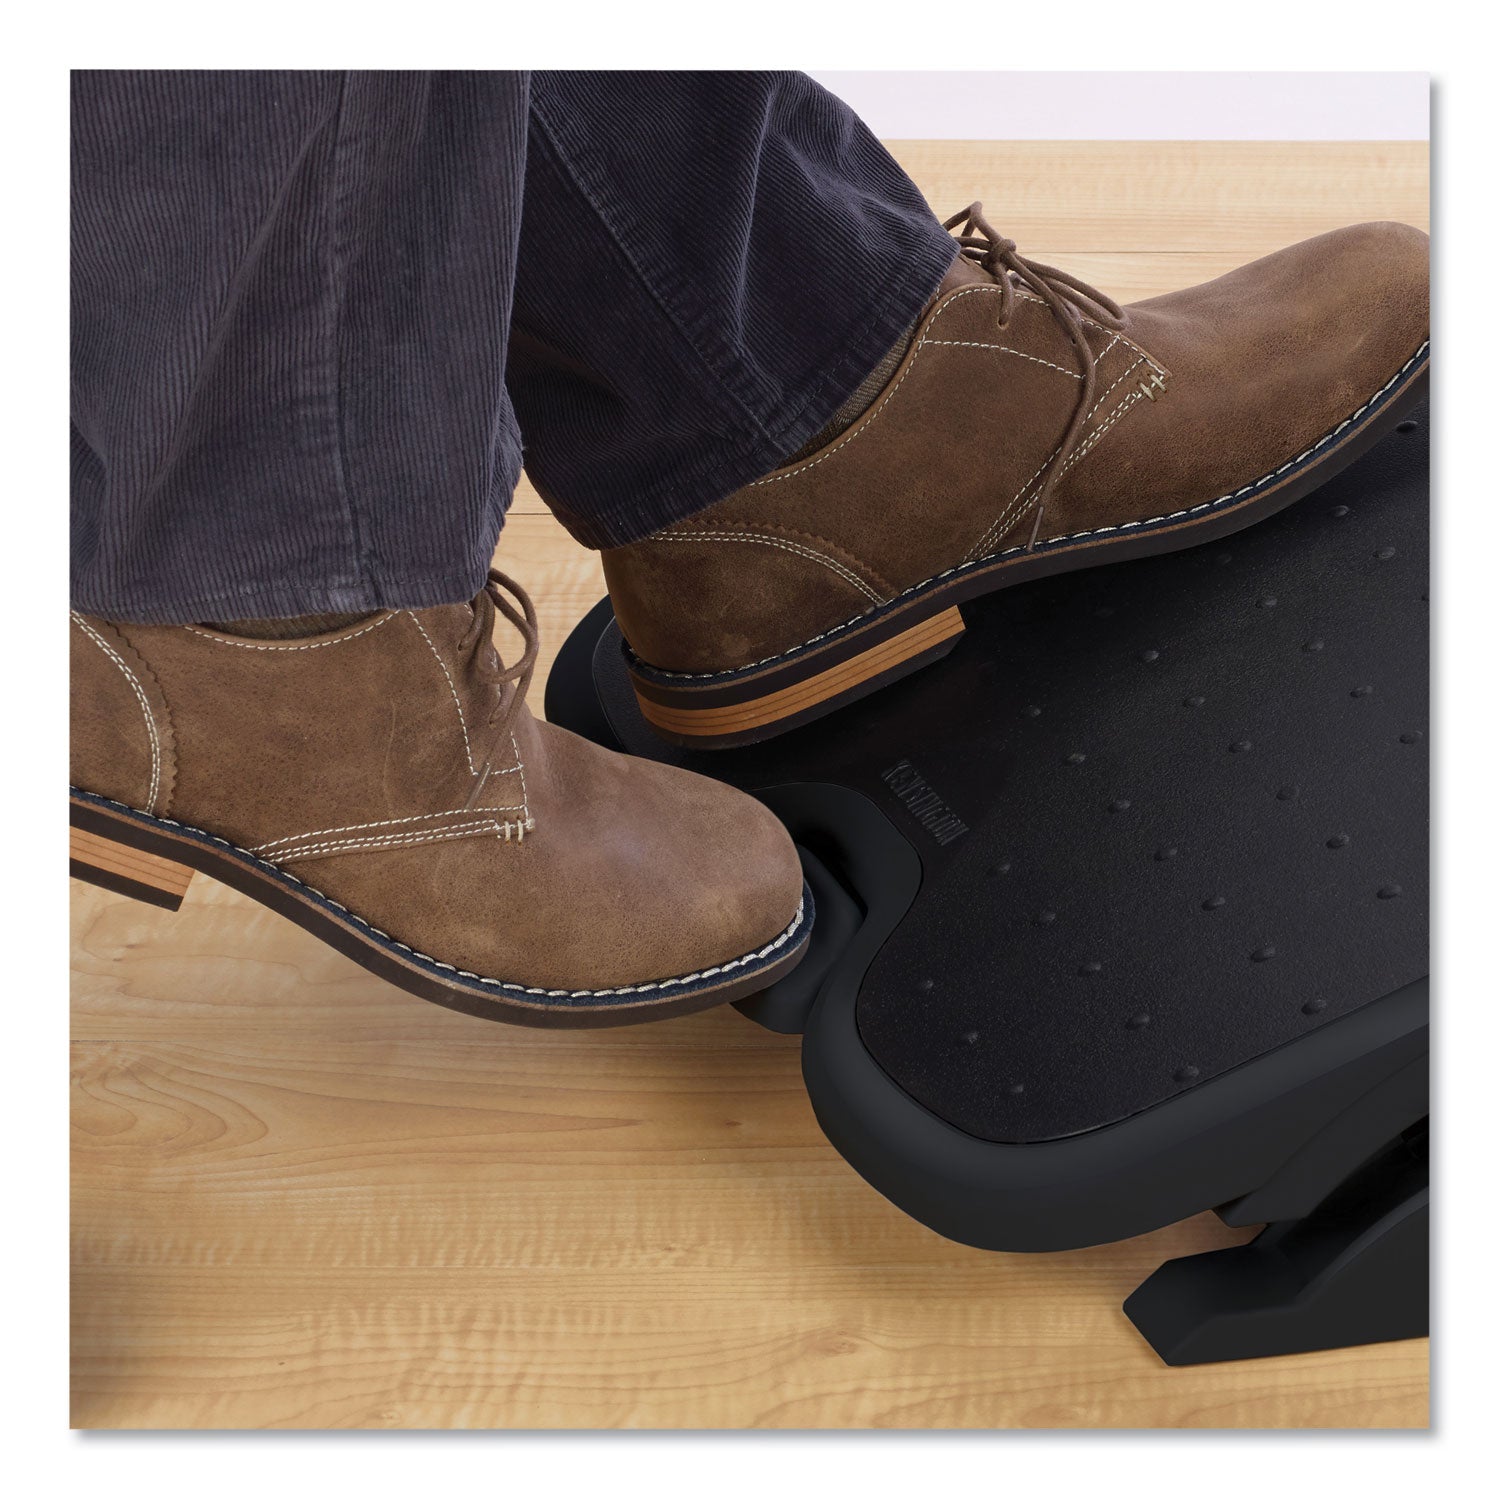 solemate-plus-adjustable-footrest-with-smartfit-system-219w-x-37d-x-142h-black_kmw52789 - 3